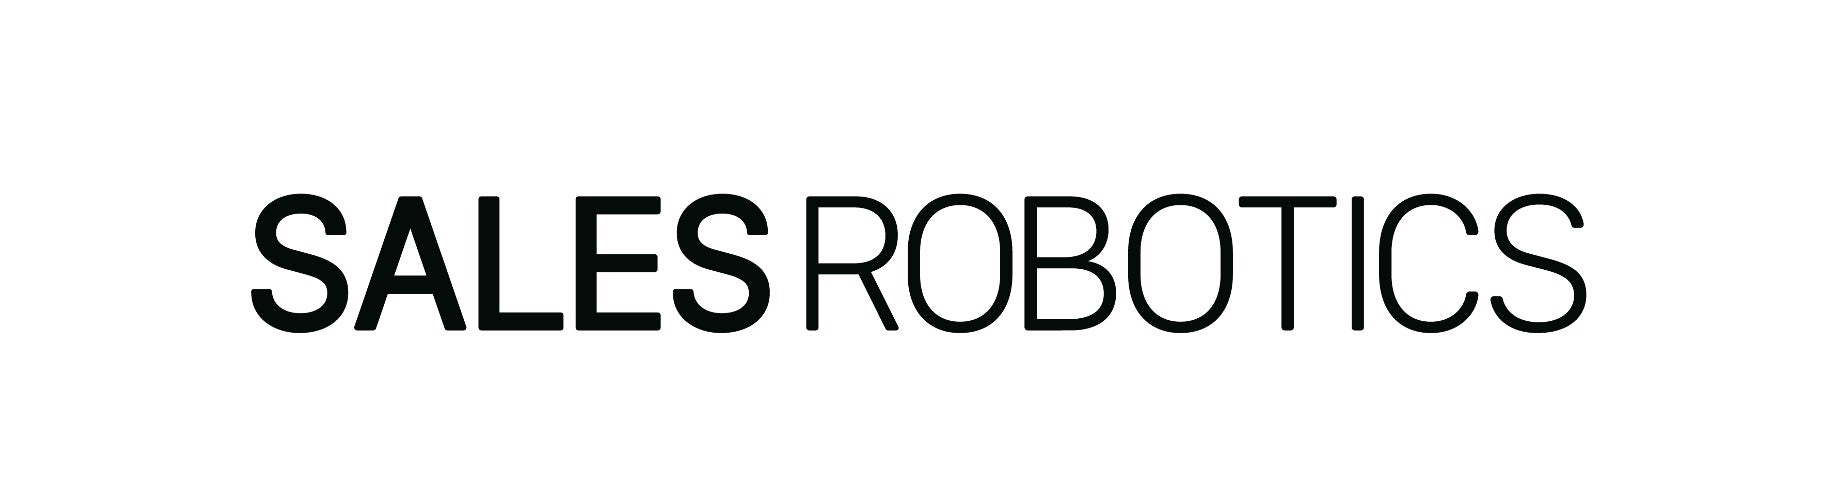 SALES ROBOTICS株式会社、コーポレートブランドを完全リニューアルのサブ画像1